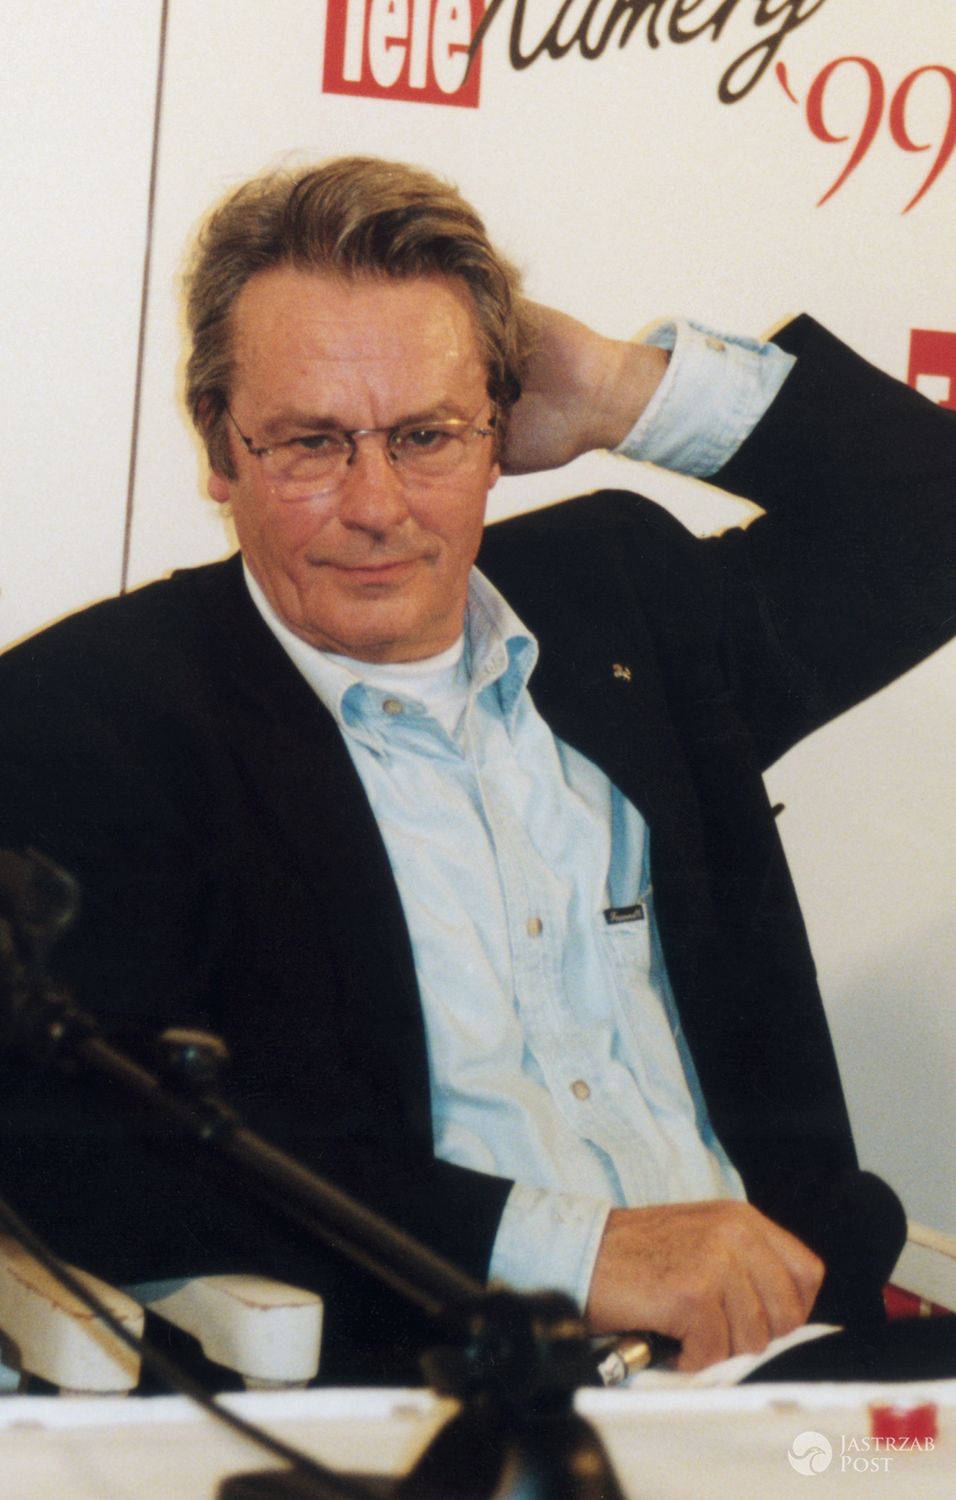 Alain Delon - Telekamery 1999